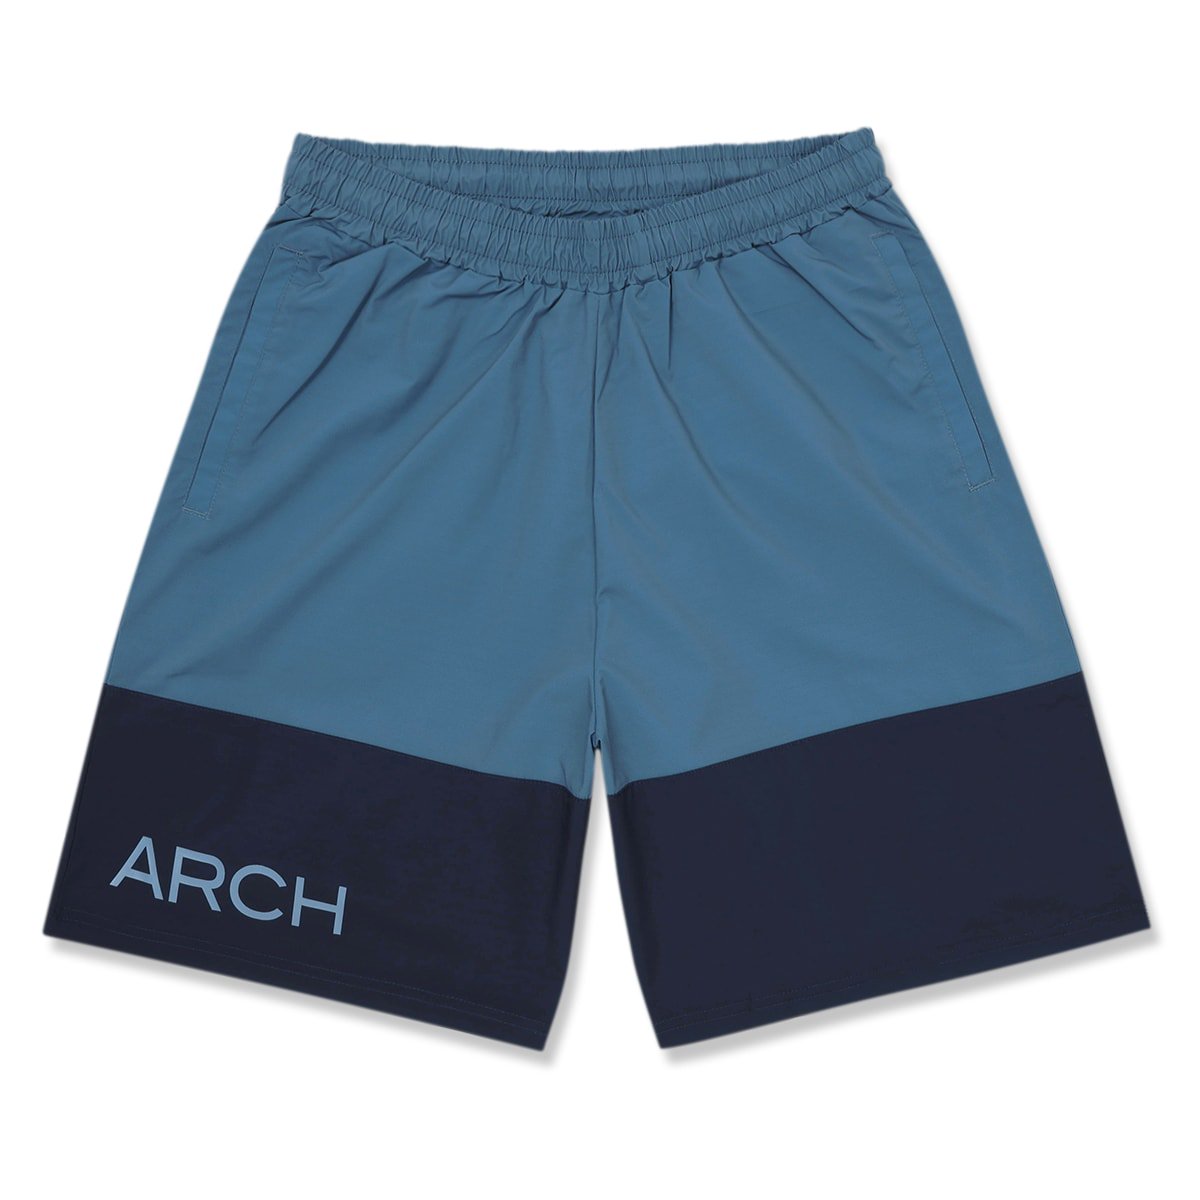 two-tone flex shorts【blue/navy】